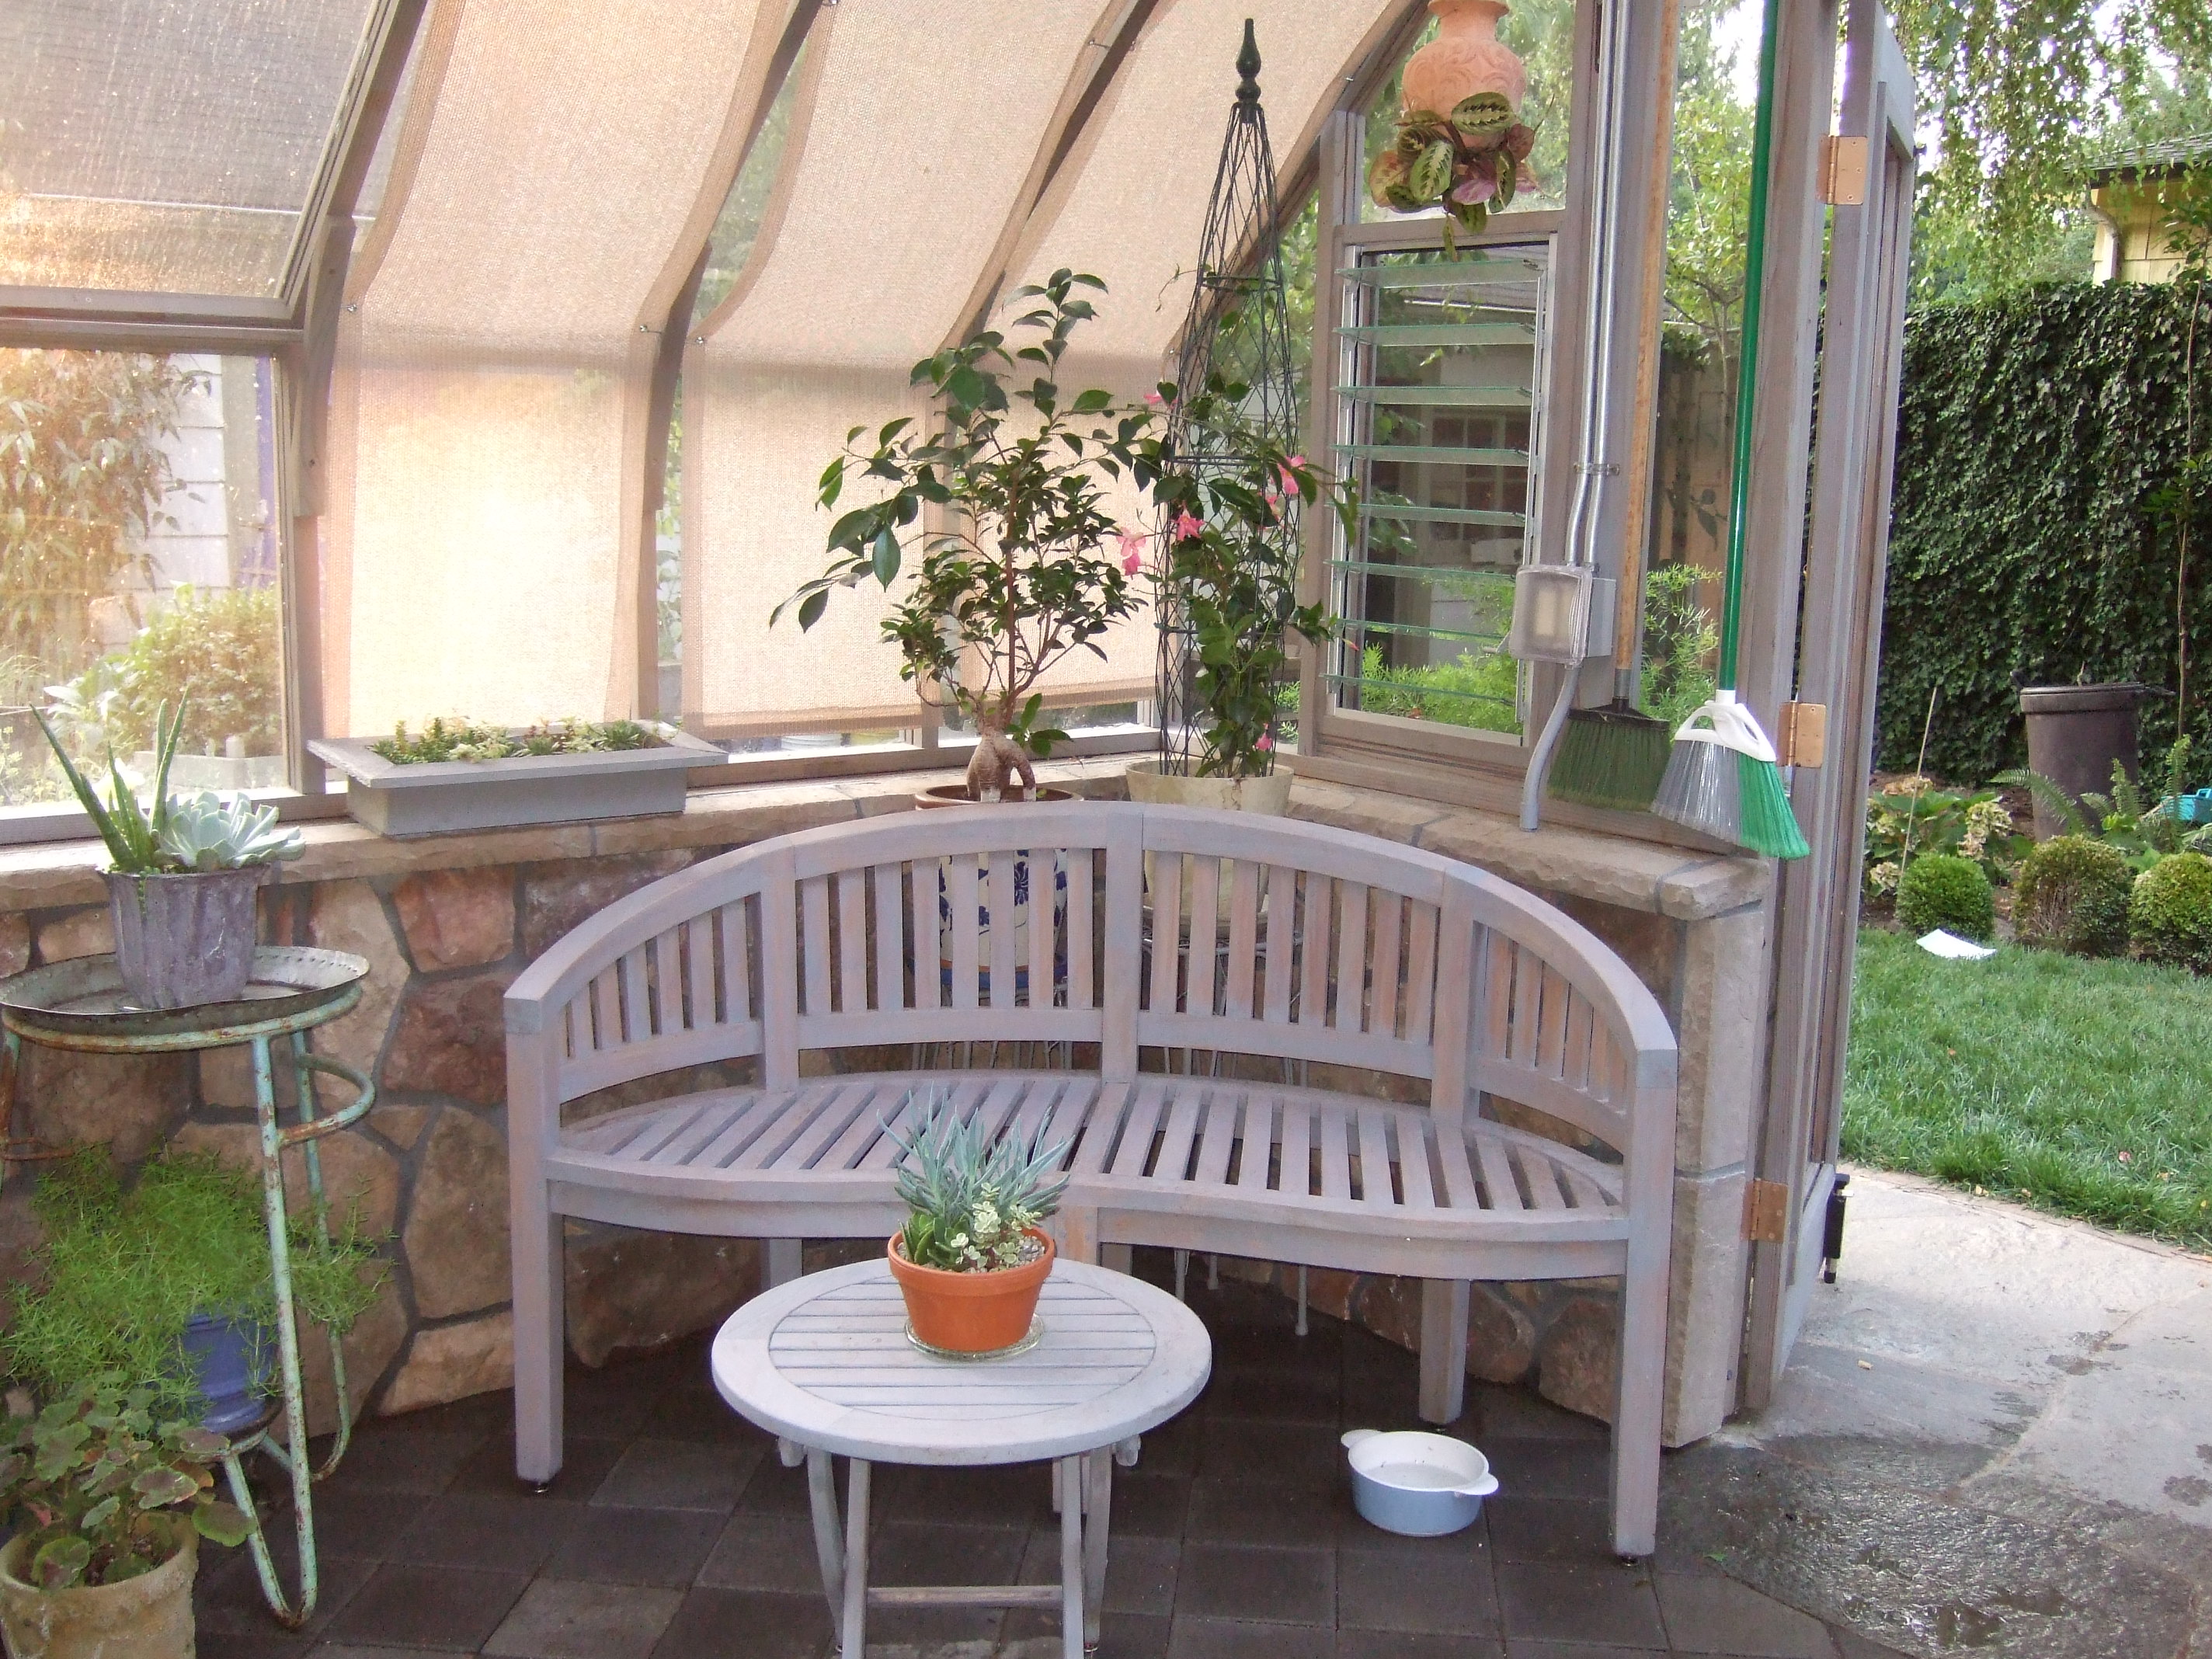 Tudor Greenhouse with sitting area